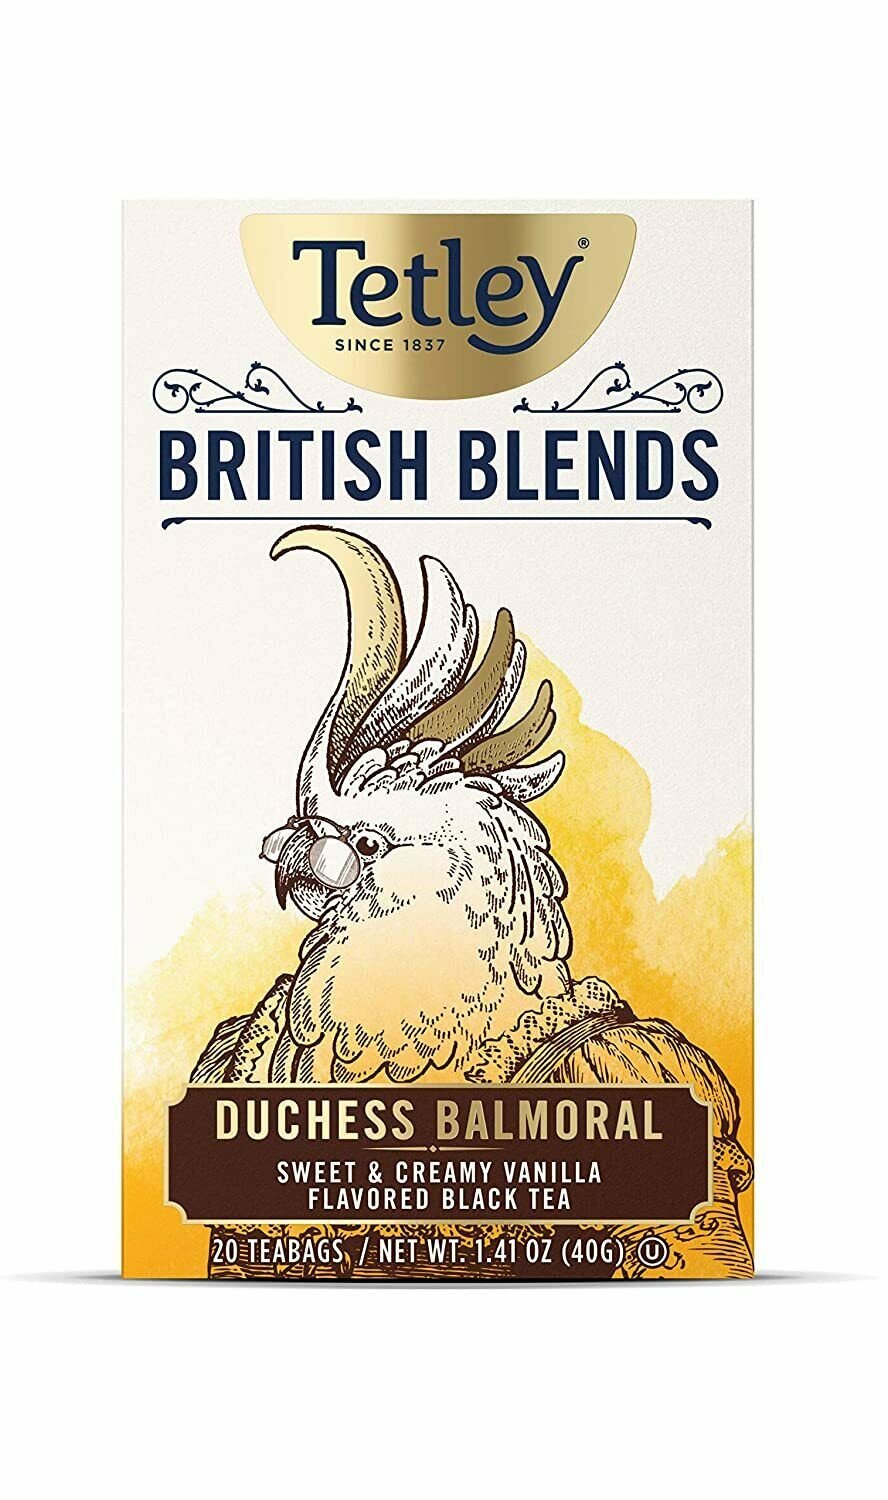 Tetley British Blends Duchess Balmoral Sweet & Creamy Vanilla Flavored Black Tea FREE SHIPPING